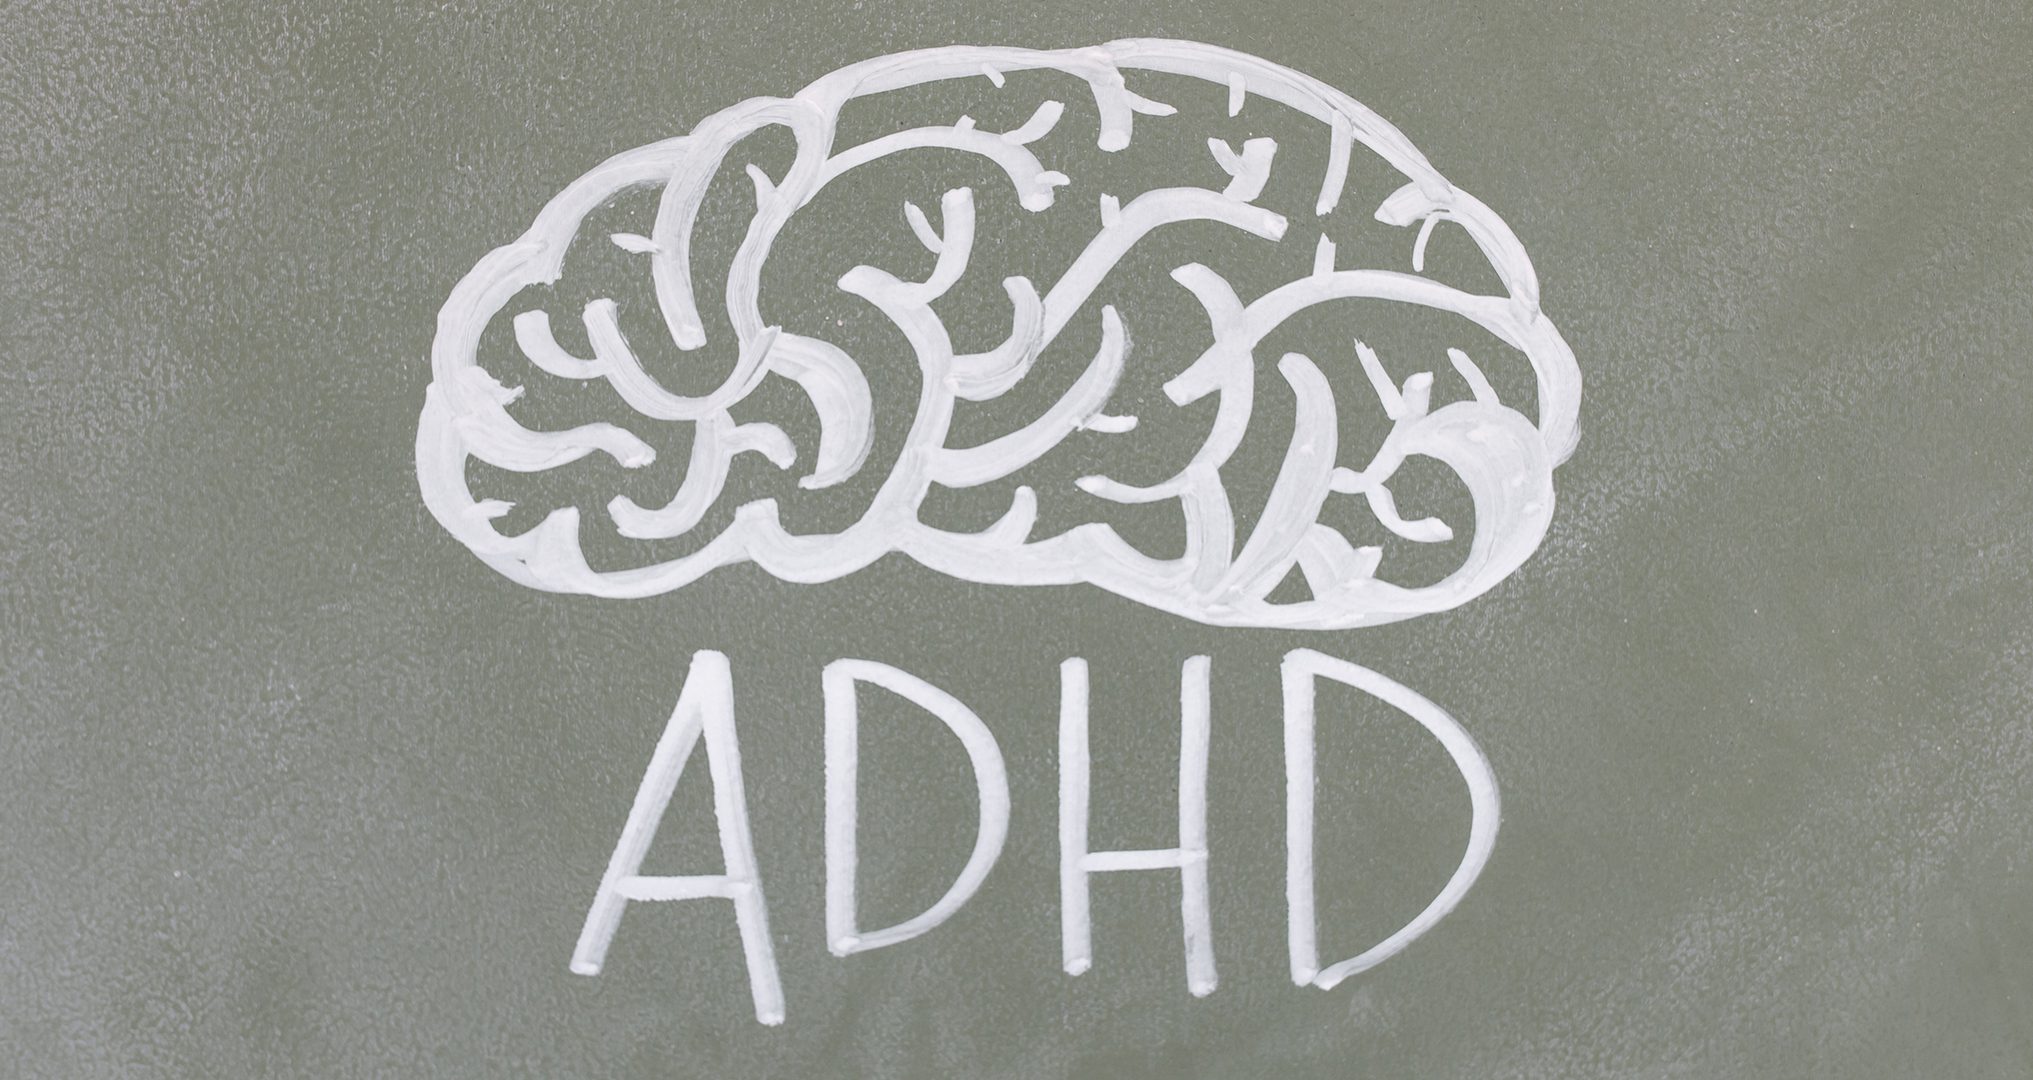 brain drawing with ADHD underneath